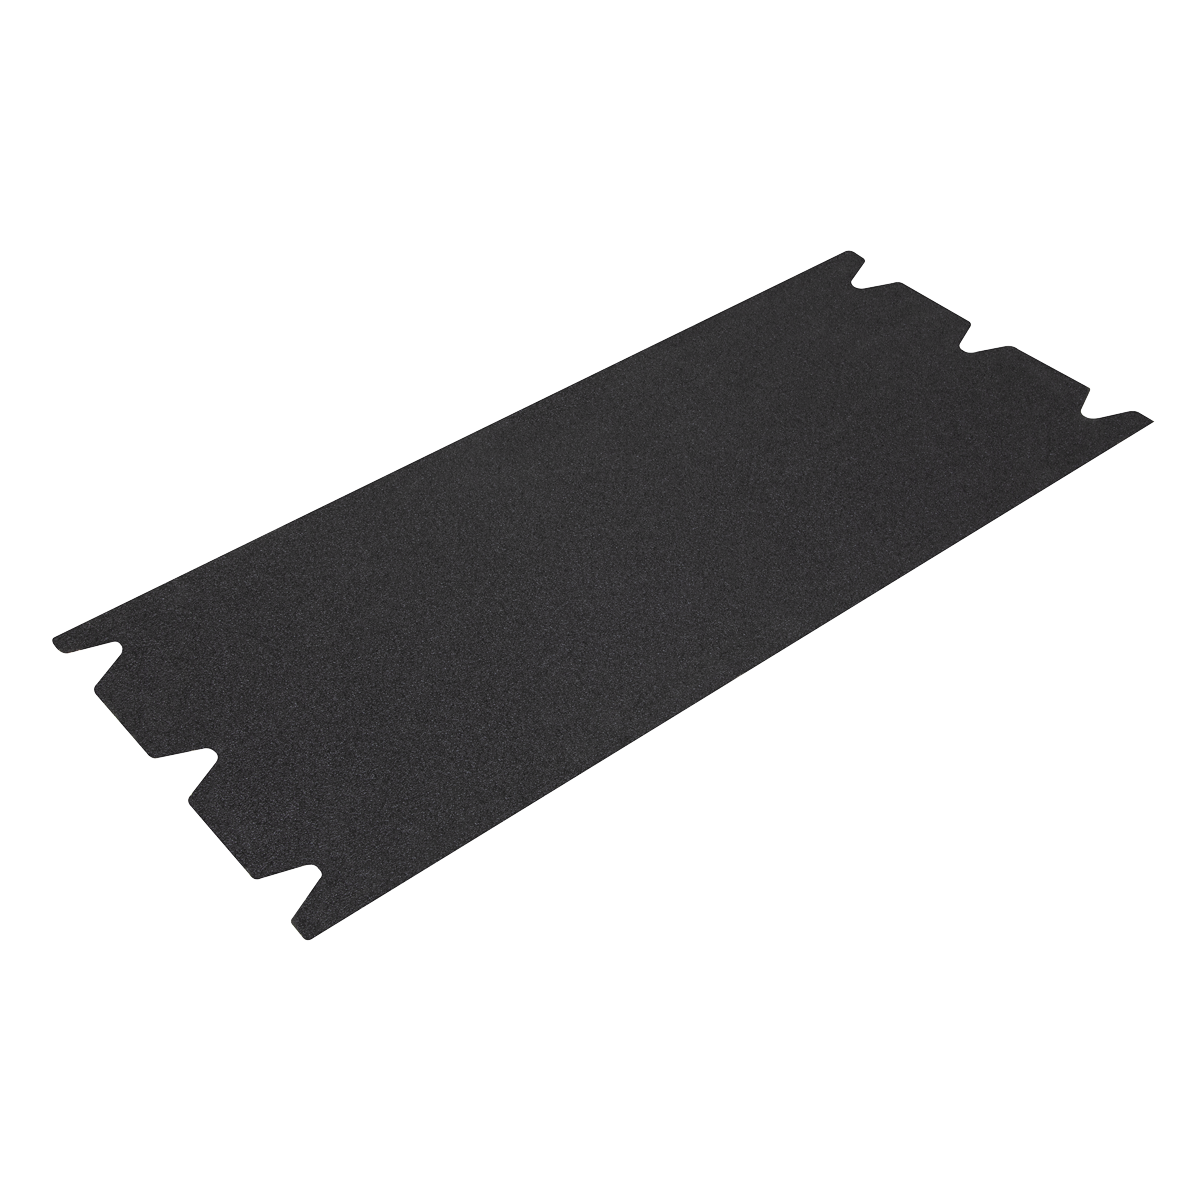 Sealey Floor Sanding Sheet 205 x 470mm 36Grit - Pack of 25 DU836EM